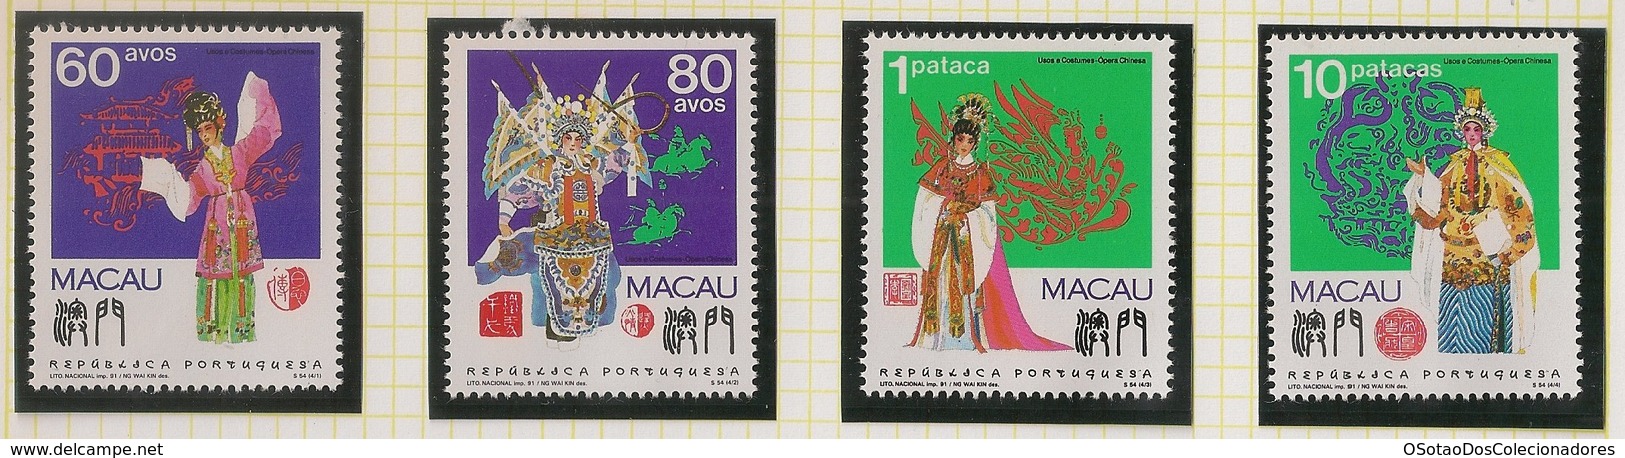 Macau Portugal China Chine 1991 - Usos E Costumes - Opera Chinesa - Chinese Opera - Set Complete - MNH/Neuf - Unused Stamps